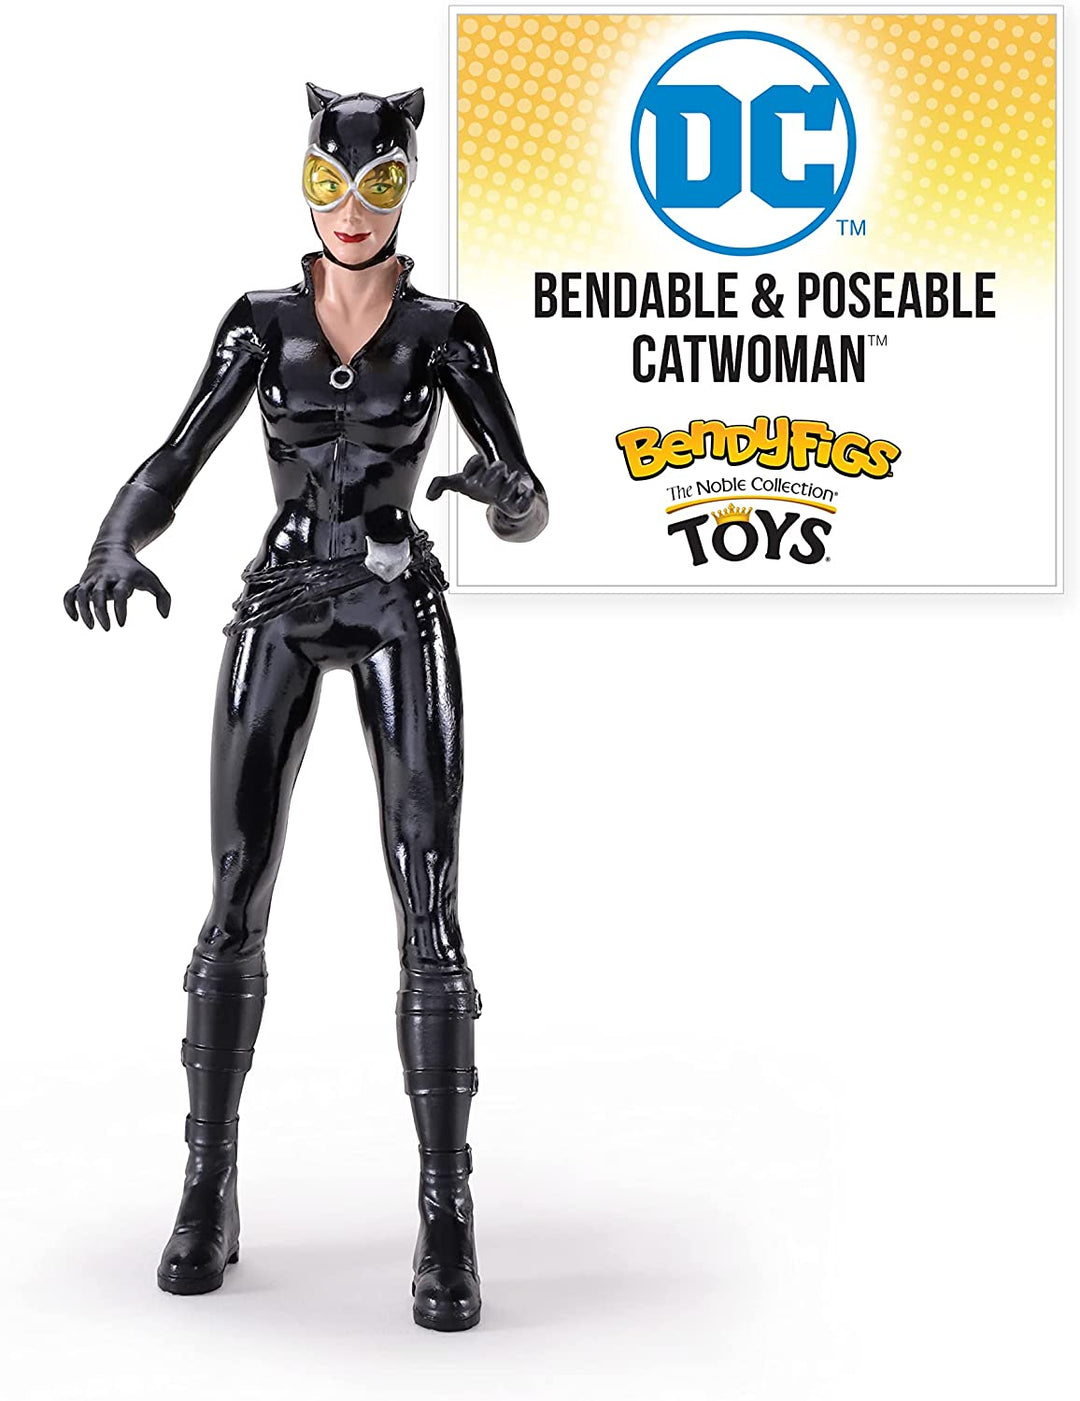 DC Comics Bendyfigs Catwoman 7.5" Bendyfigs